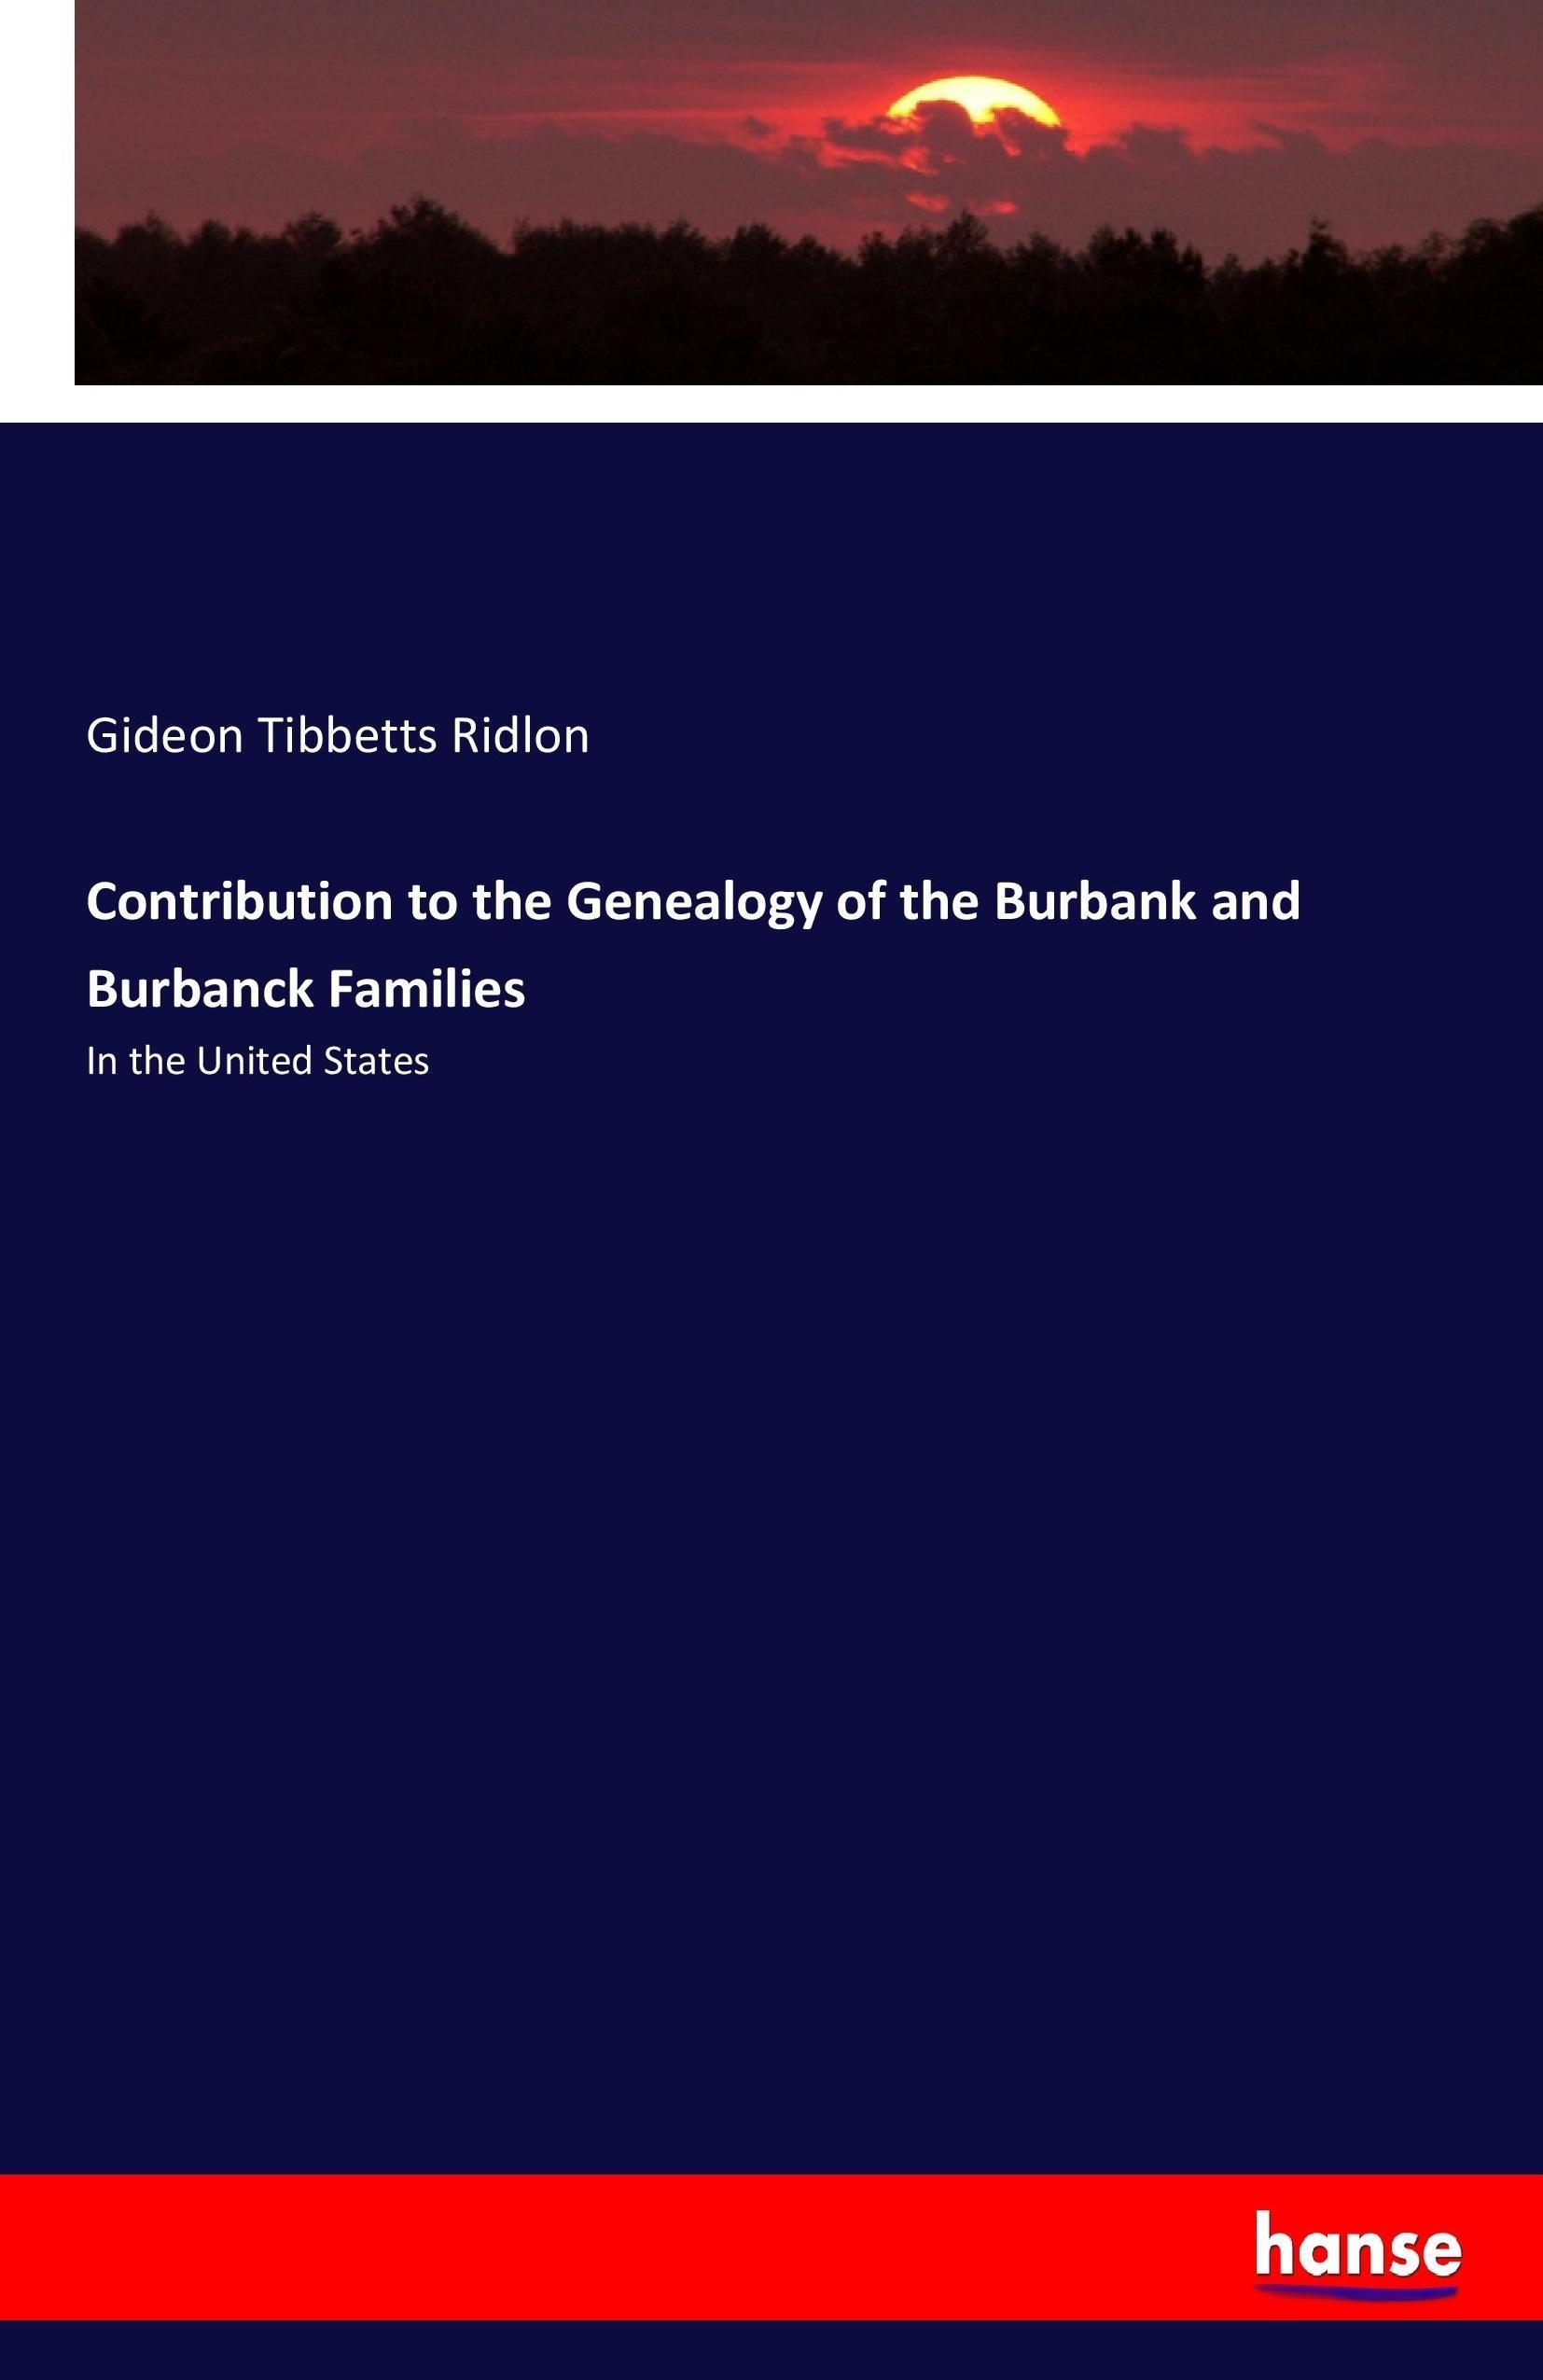 Contribution to the Genealogy of the Burbank and Burbanck Families - Ridlon, Gideon Tibbetts